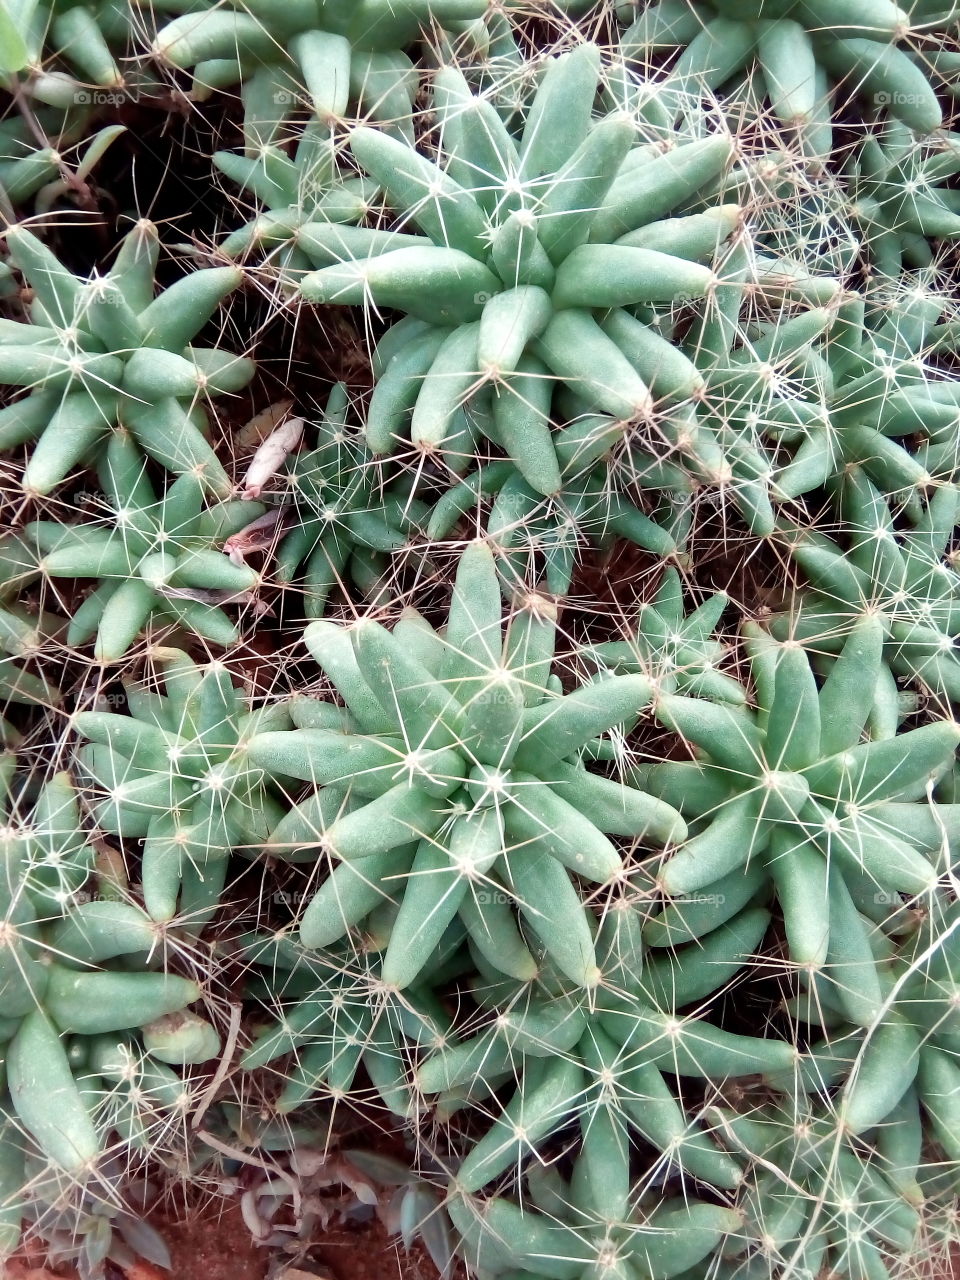 lovable cactus